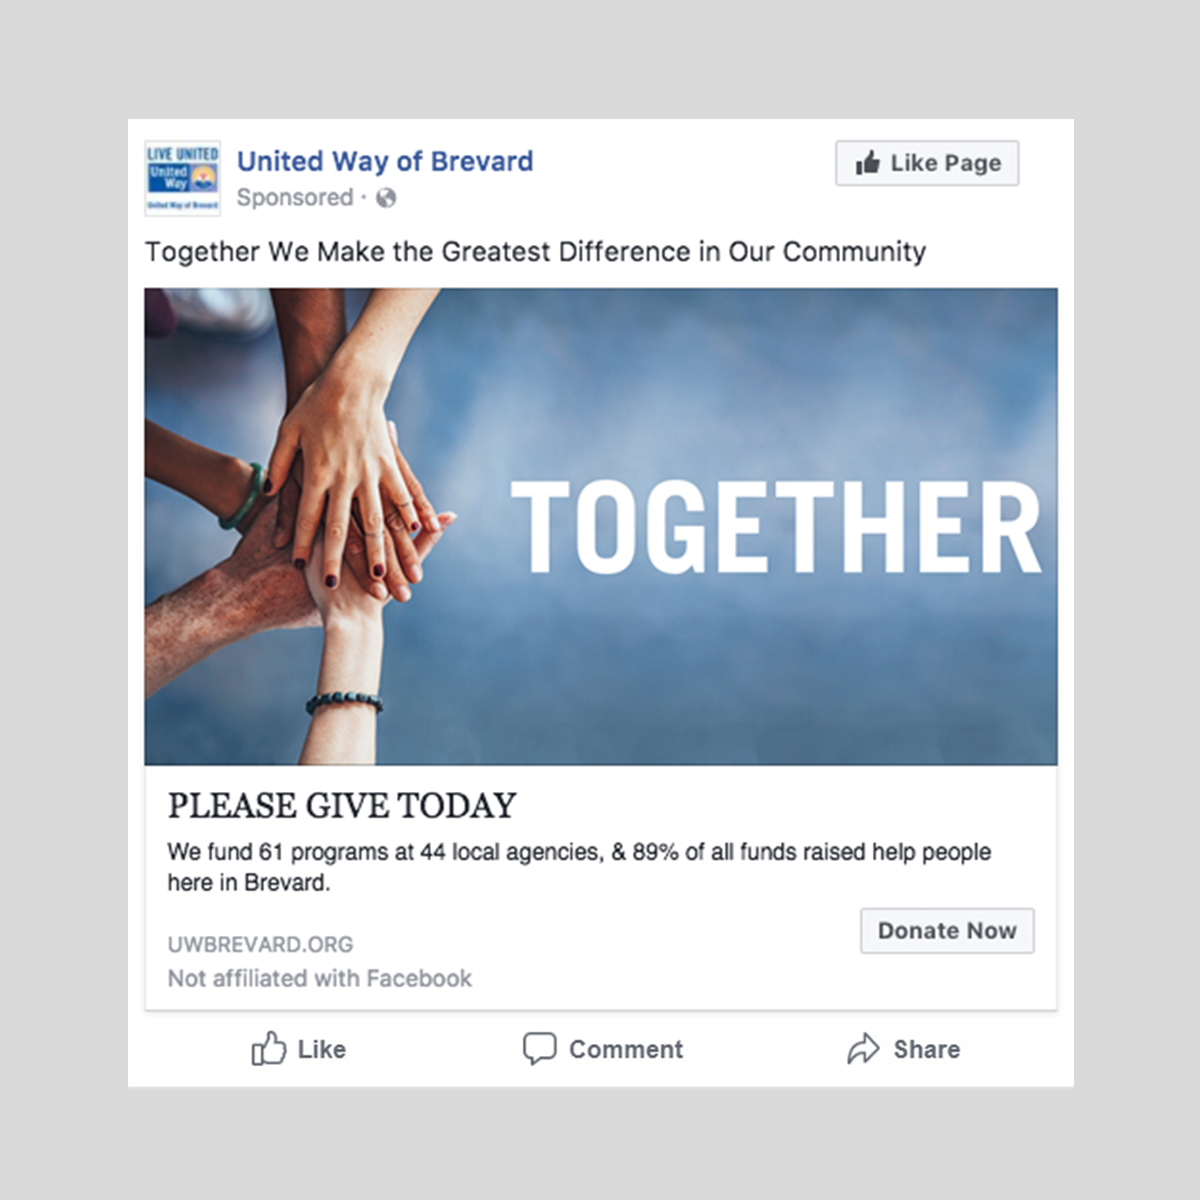 United way together campaign digital ad